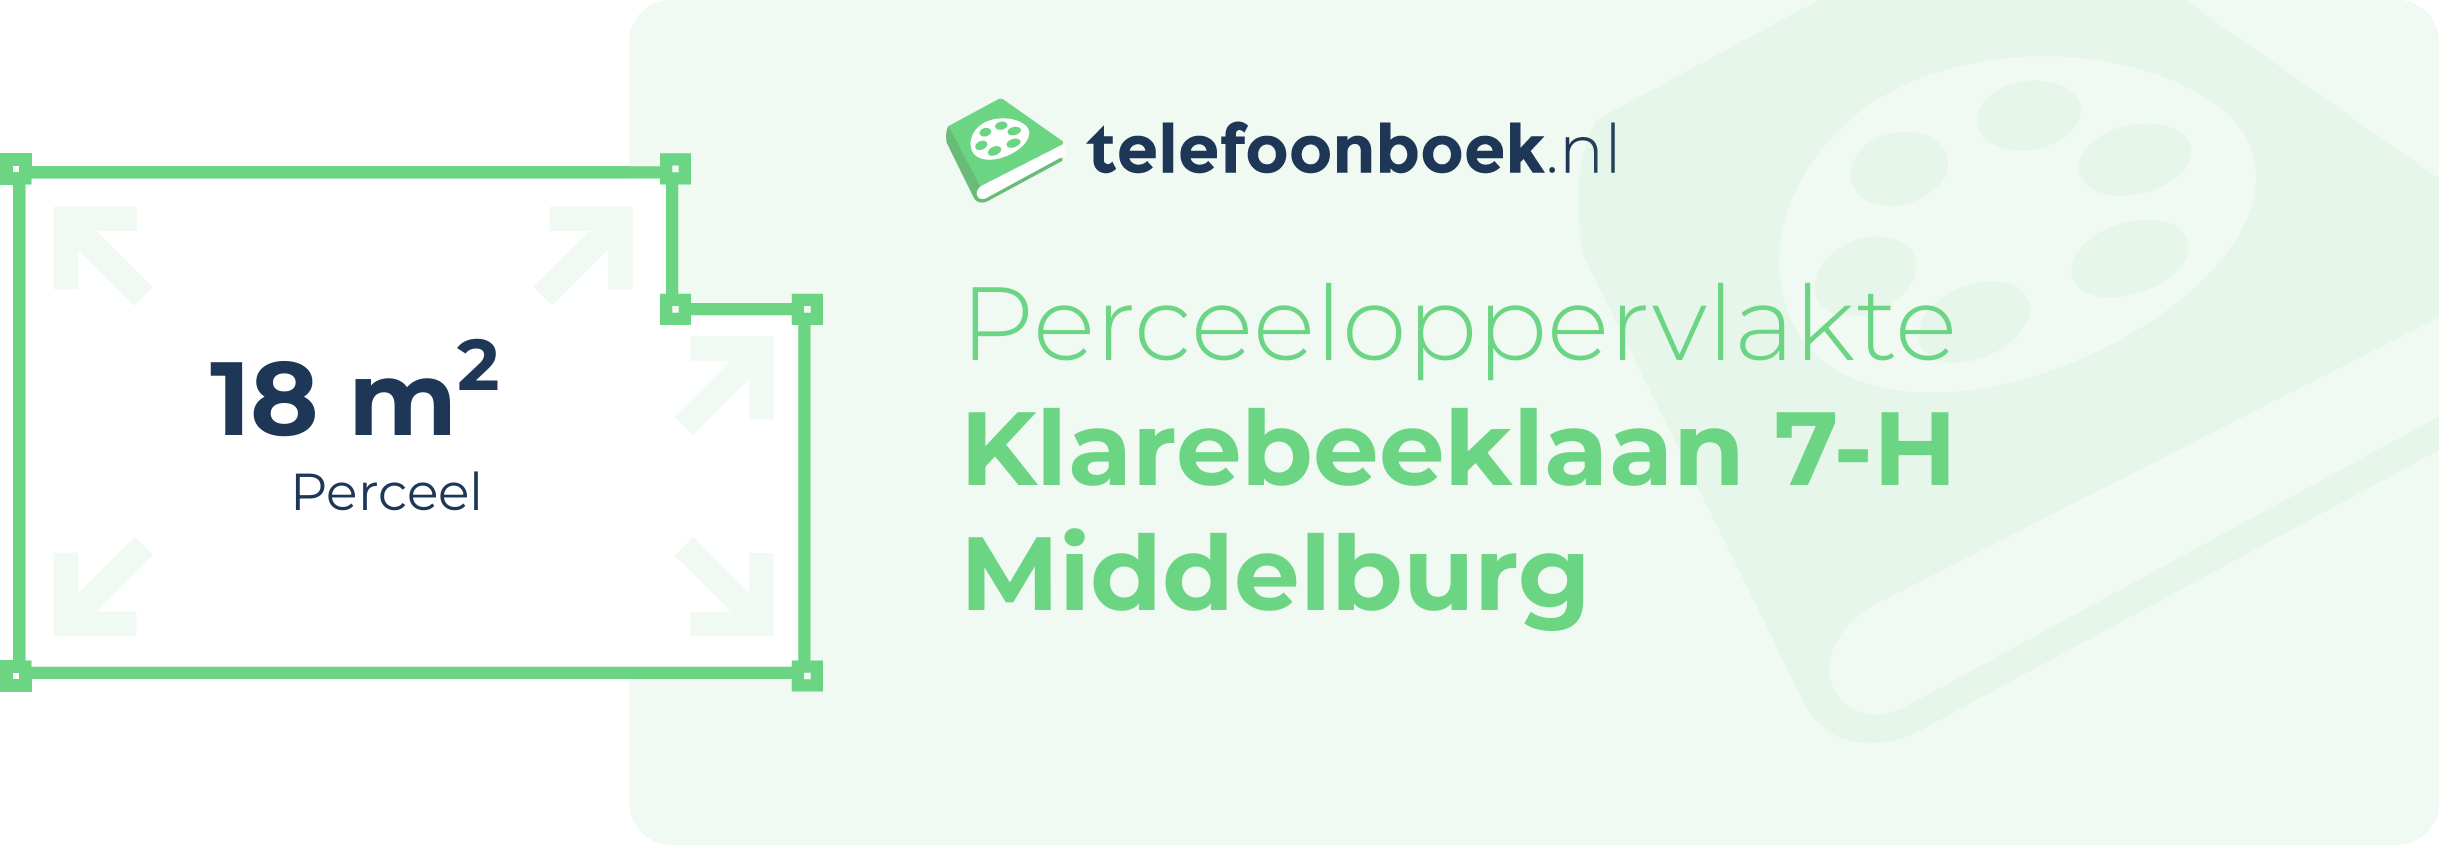 Perceeloppervlakte Klarebeeklaan 7-H Middelburg